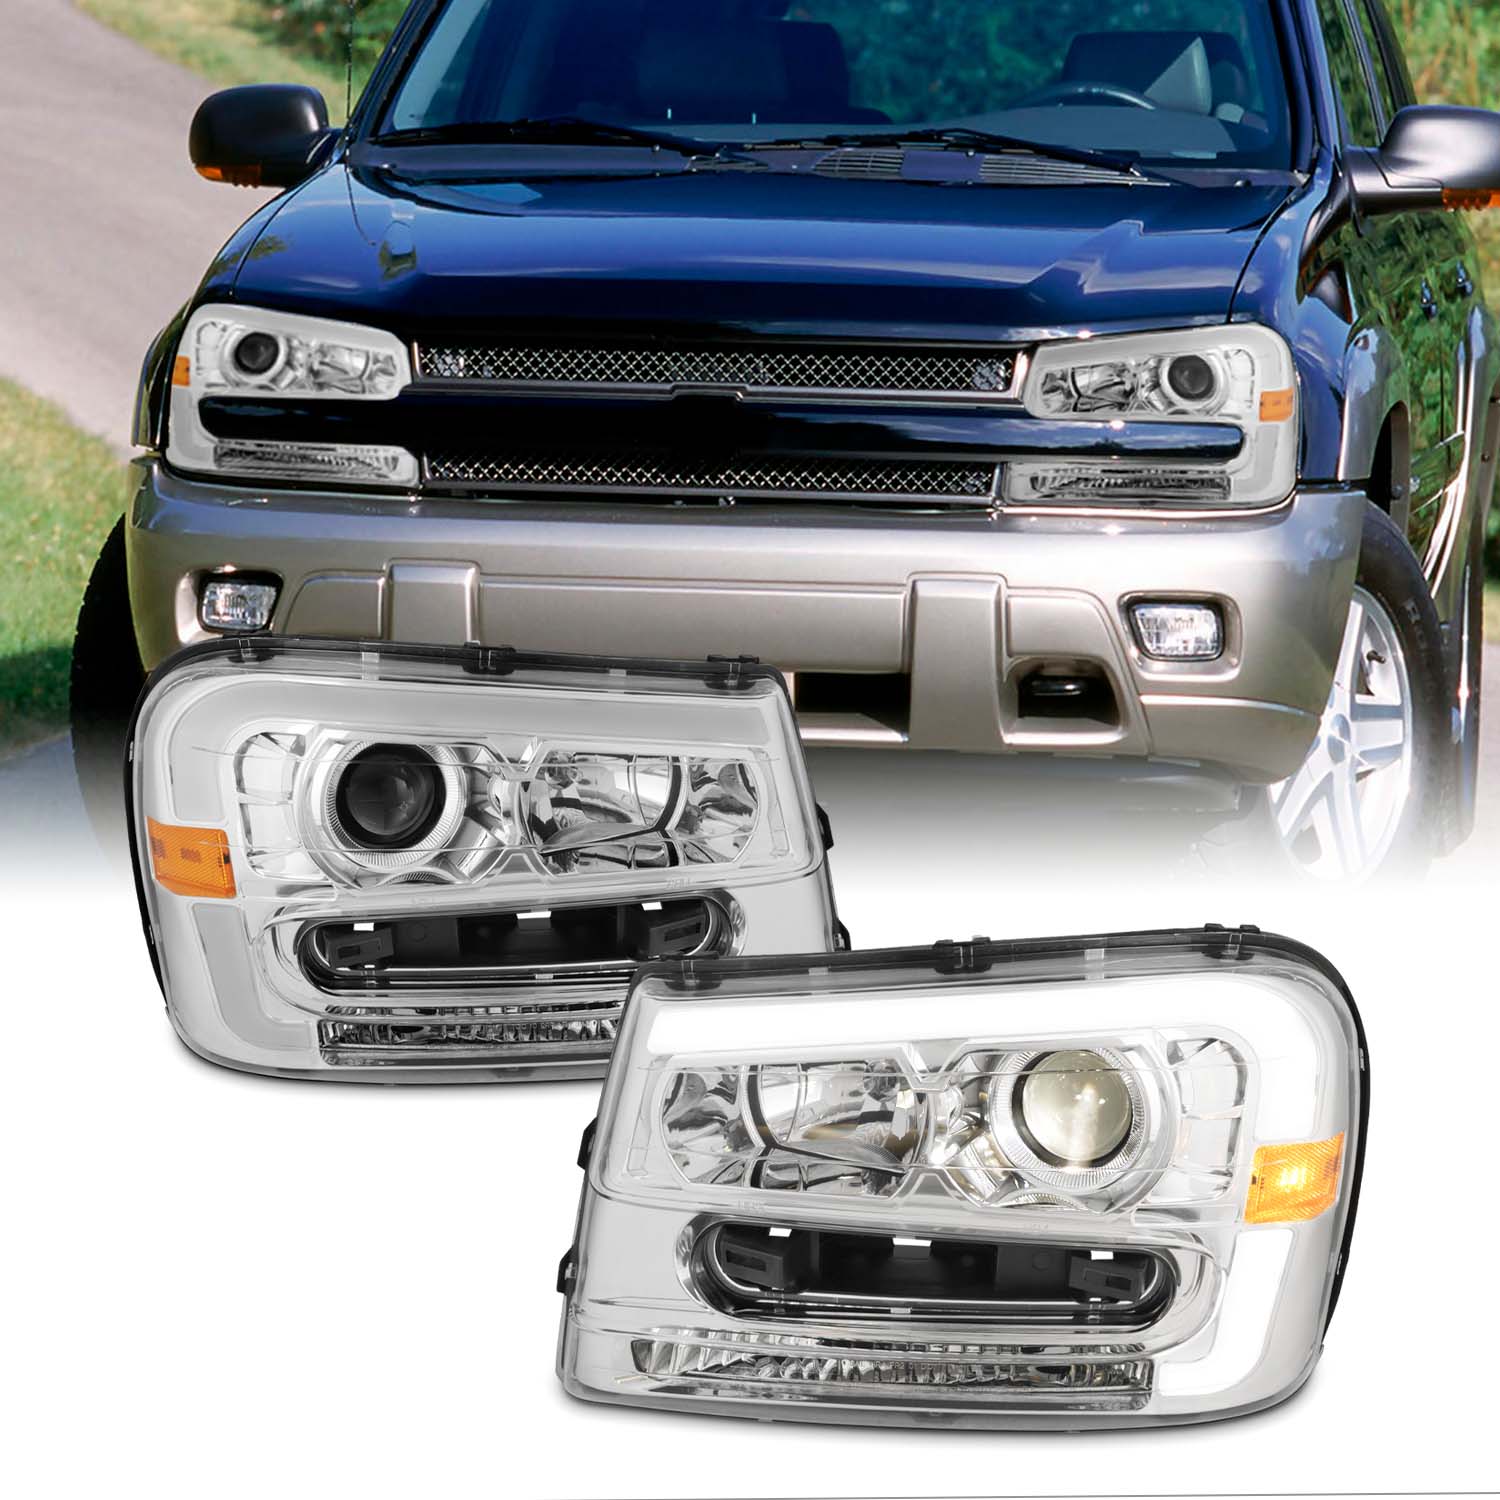 AKKON - Fits 2002-2009 Chevy Trailblazer [LED DRL Running] Projector C